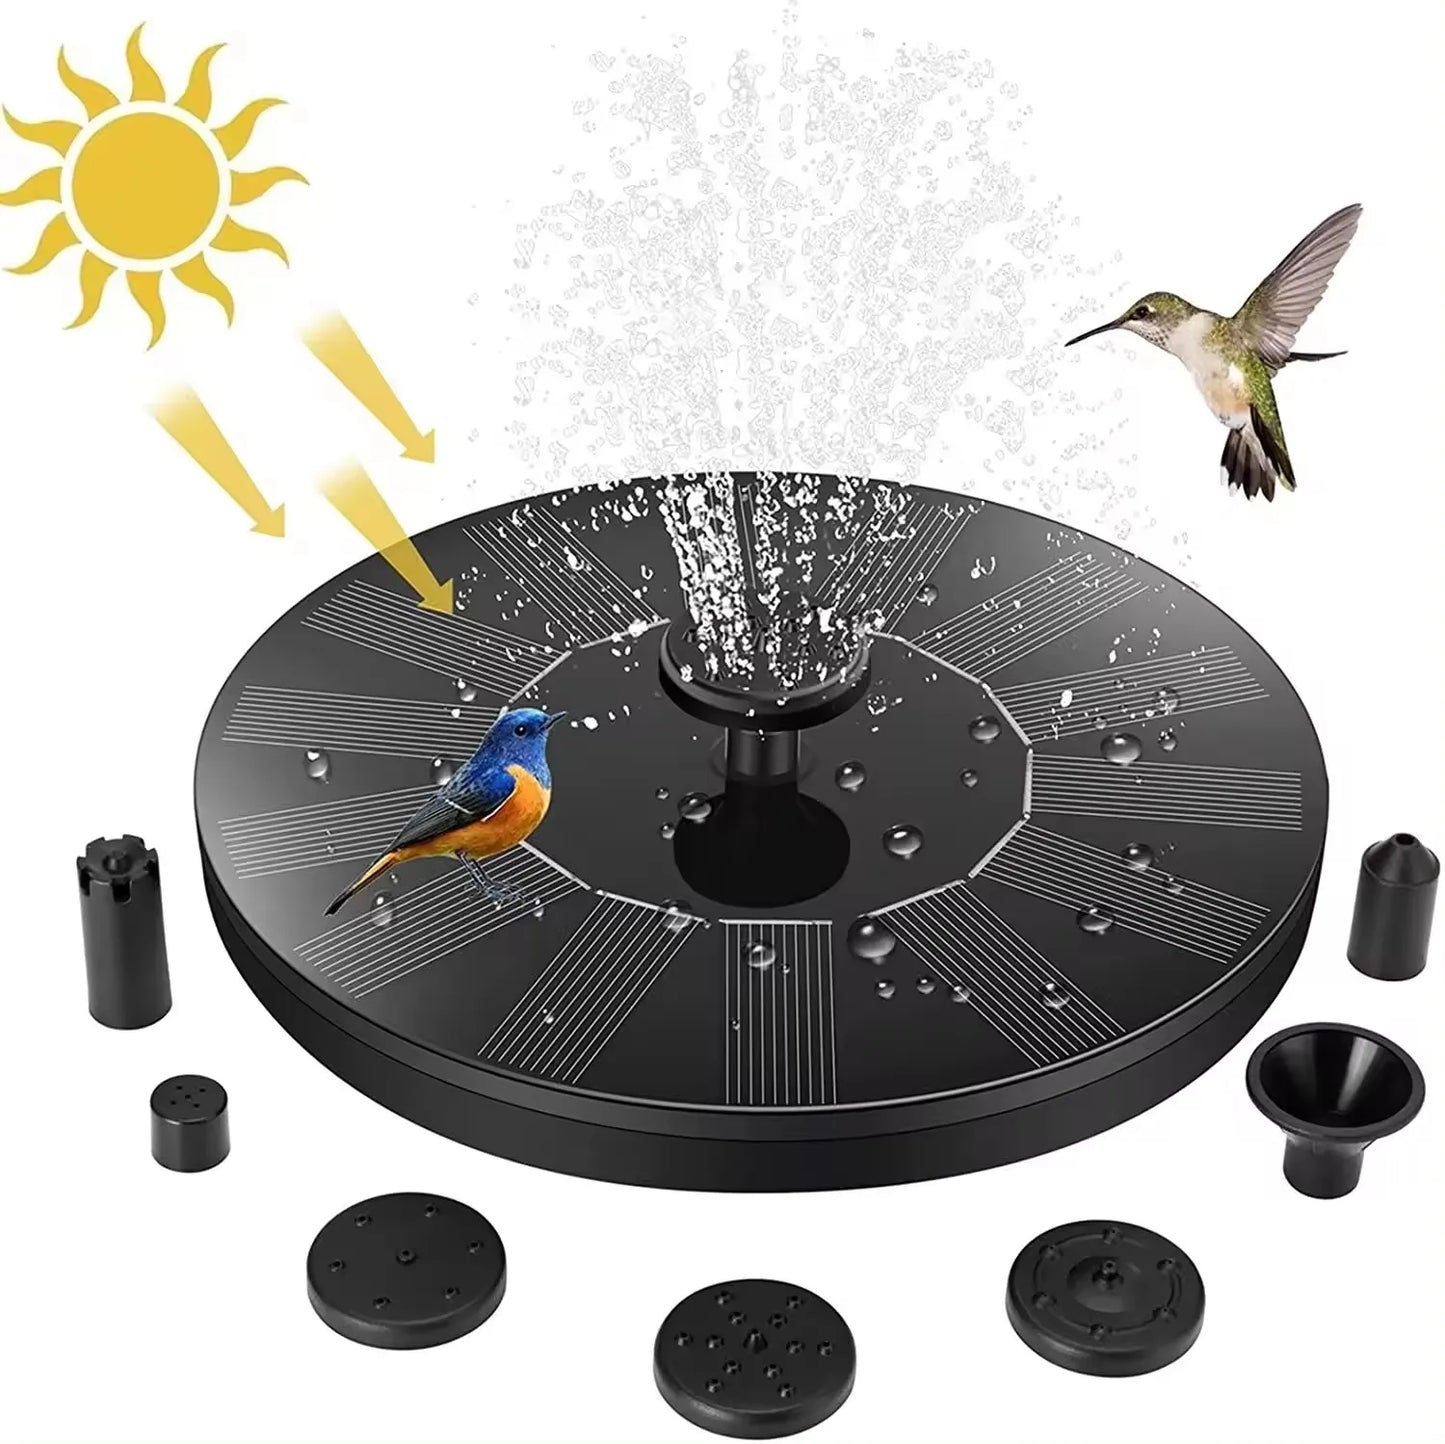 Bird Haven™ Solar Powered Water Fountain